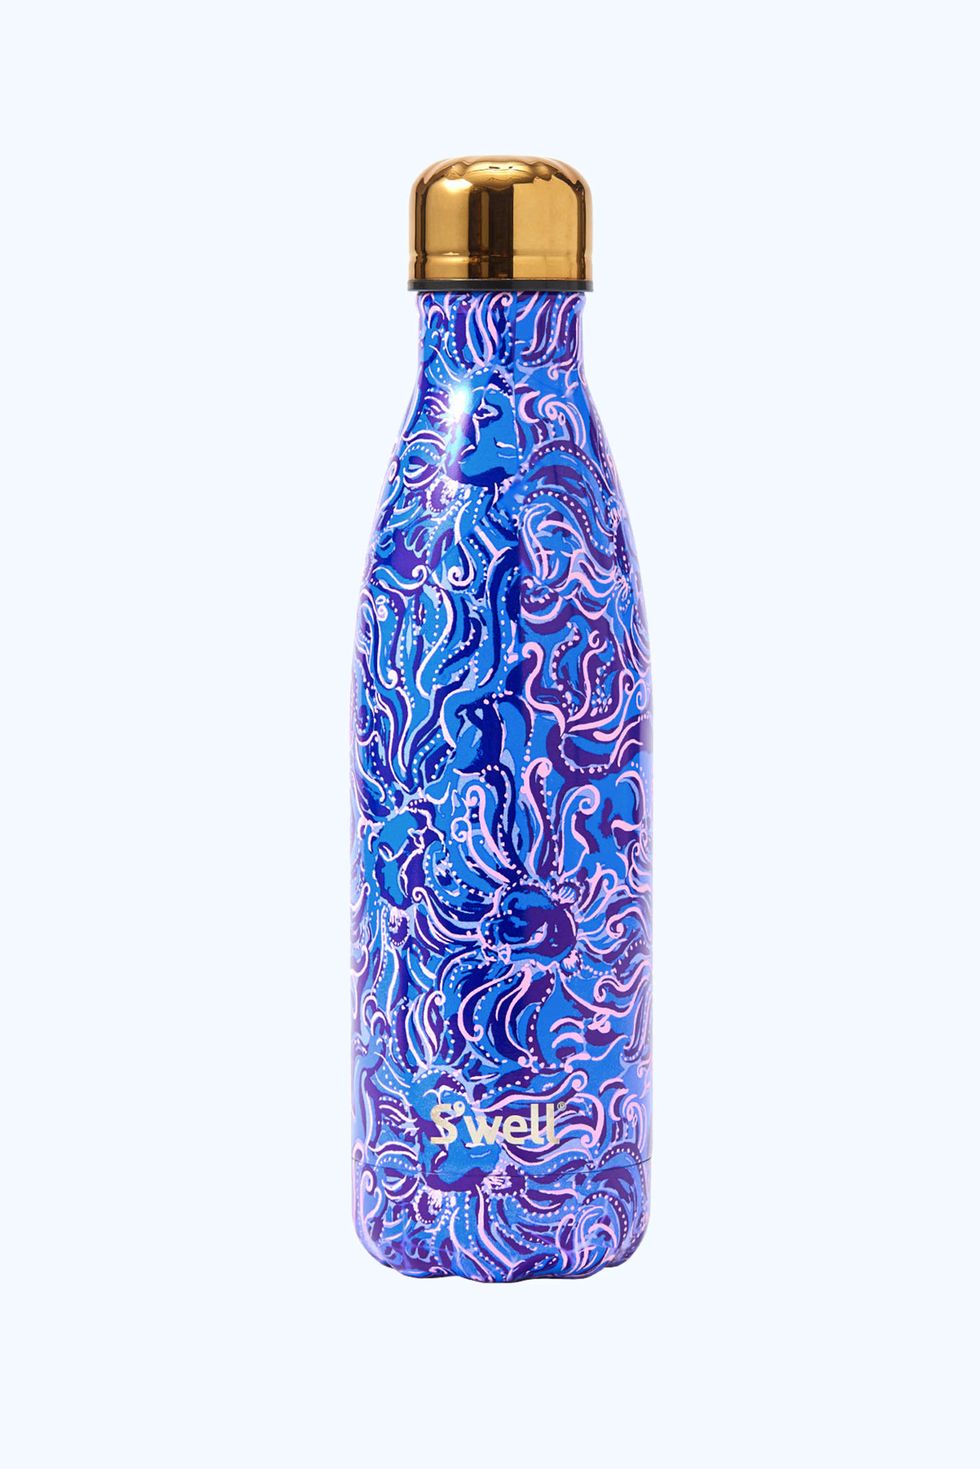 17 oz Swell Bottle